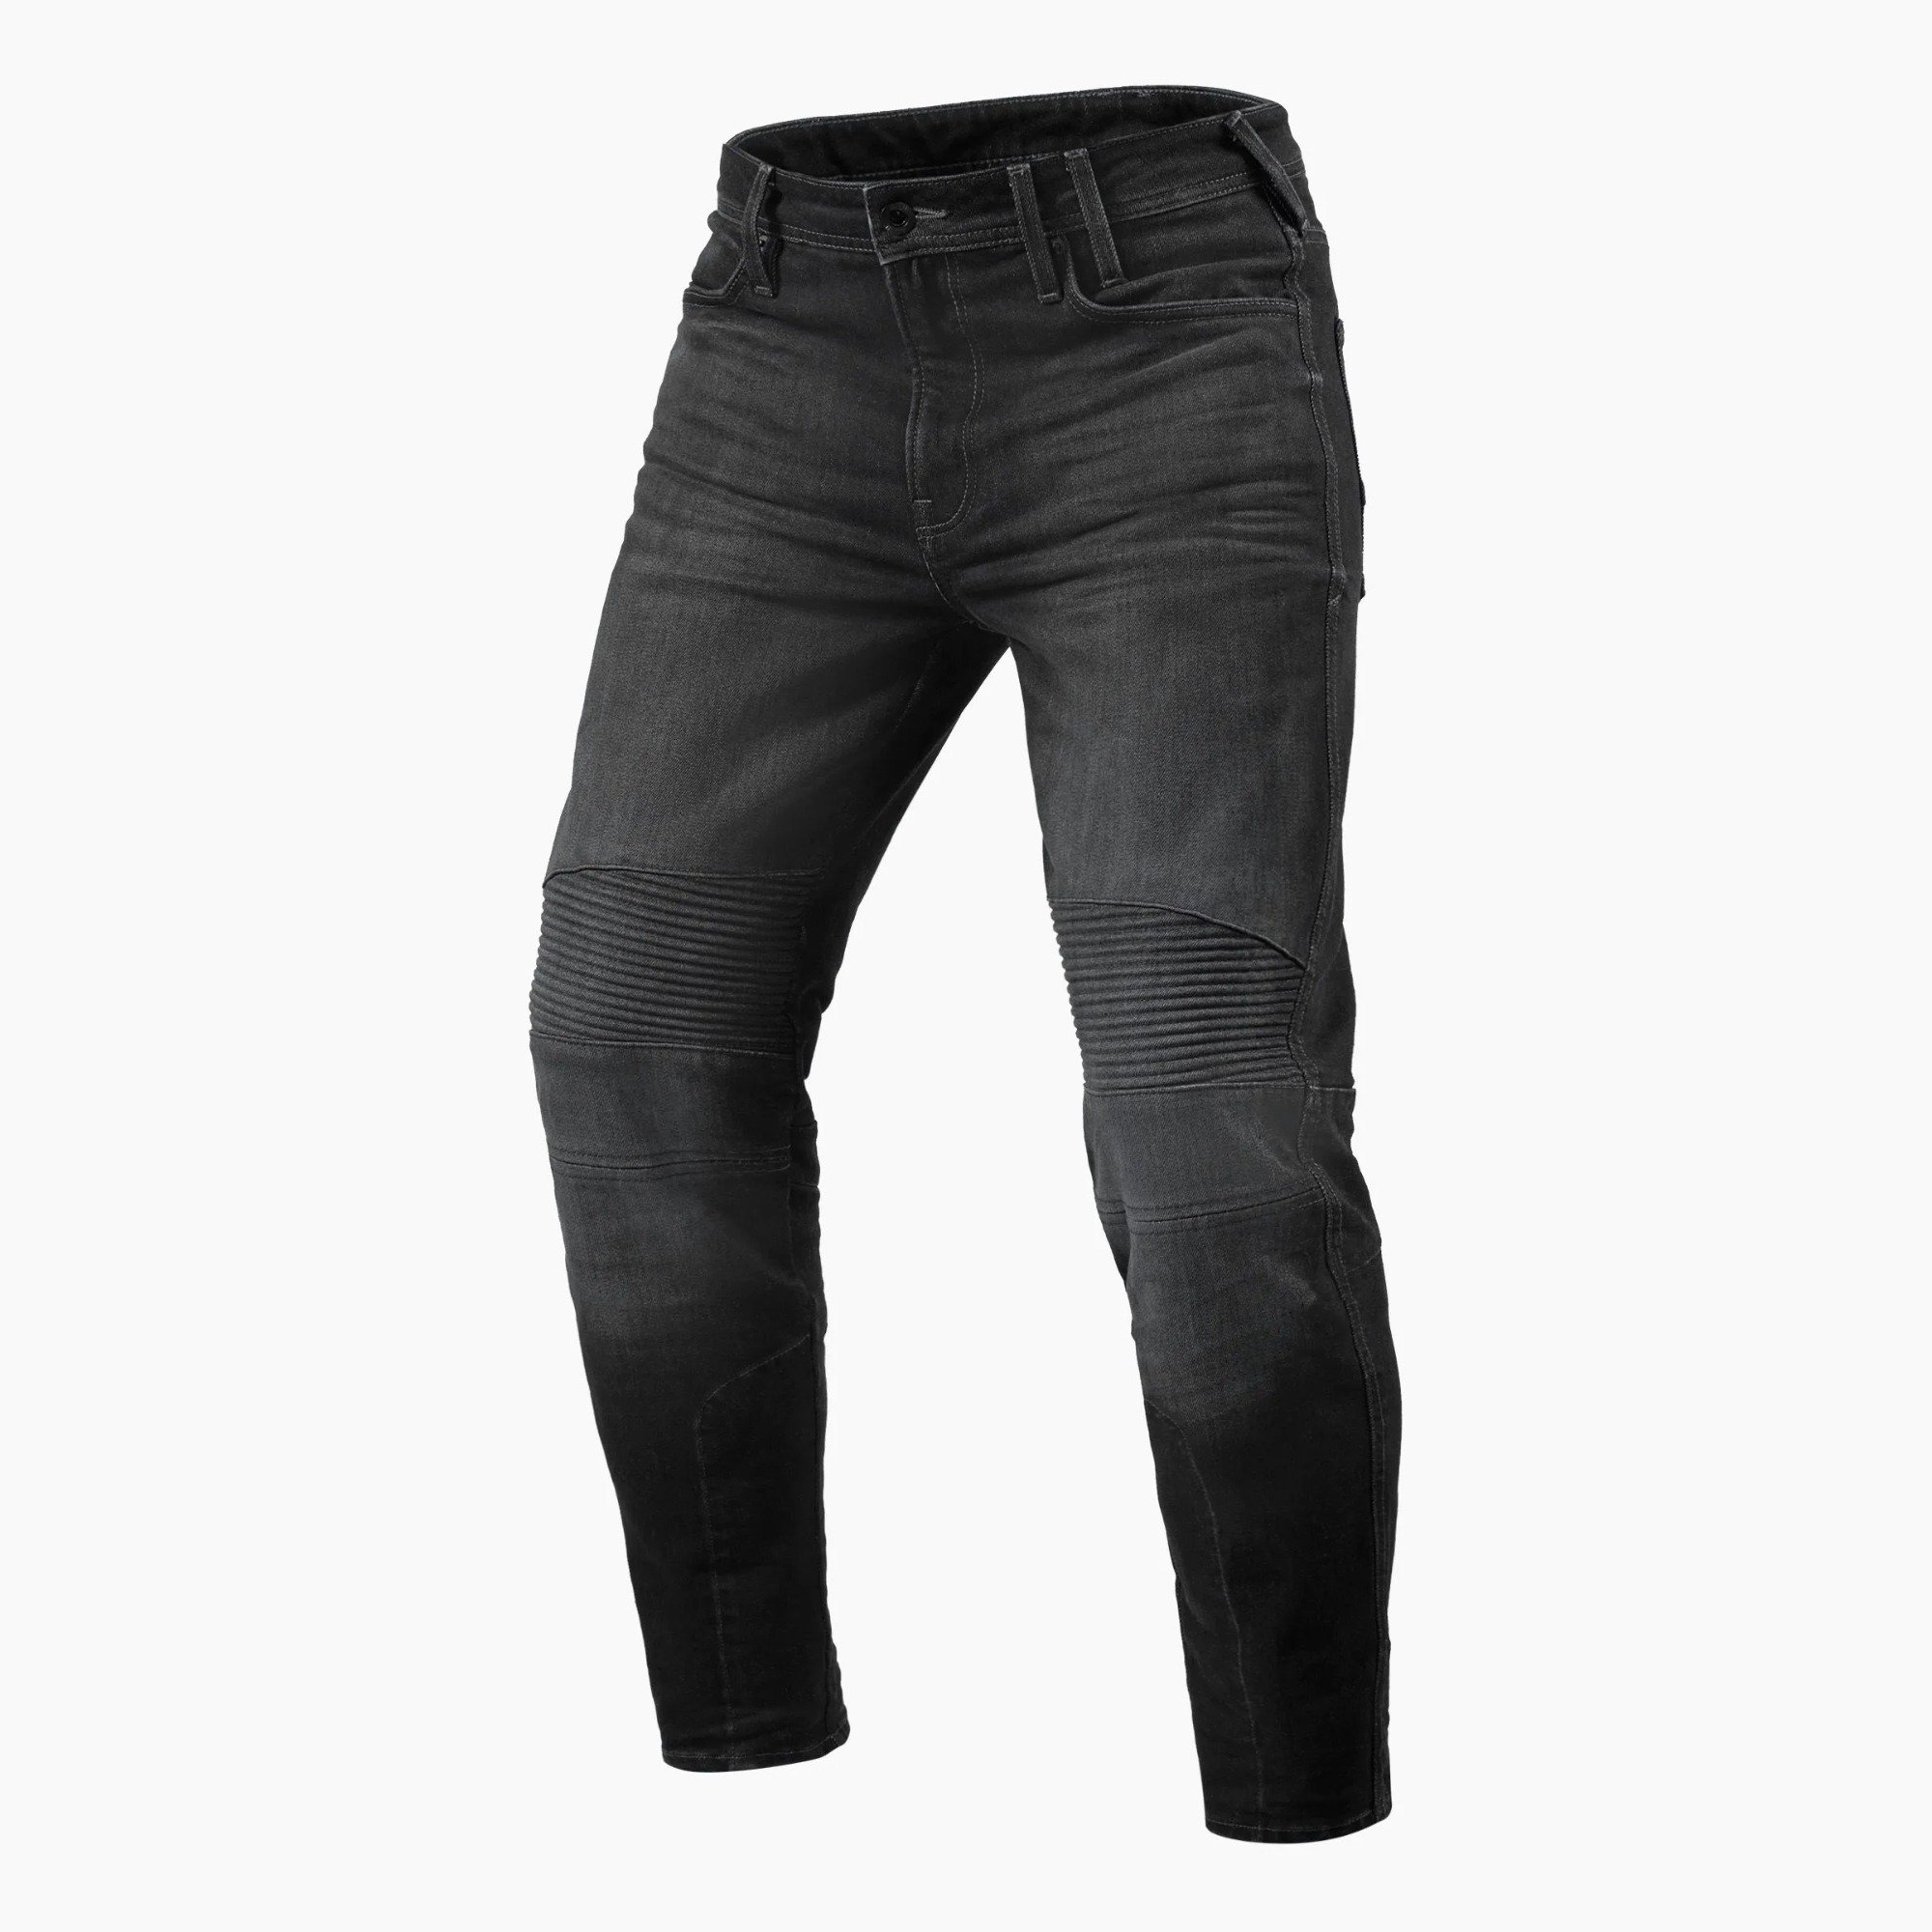 Image of REV'IT! Jeans Moto 2 TF Dark Grey Used Motorcycle Jeans Talla L34/W31